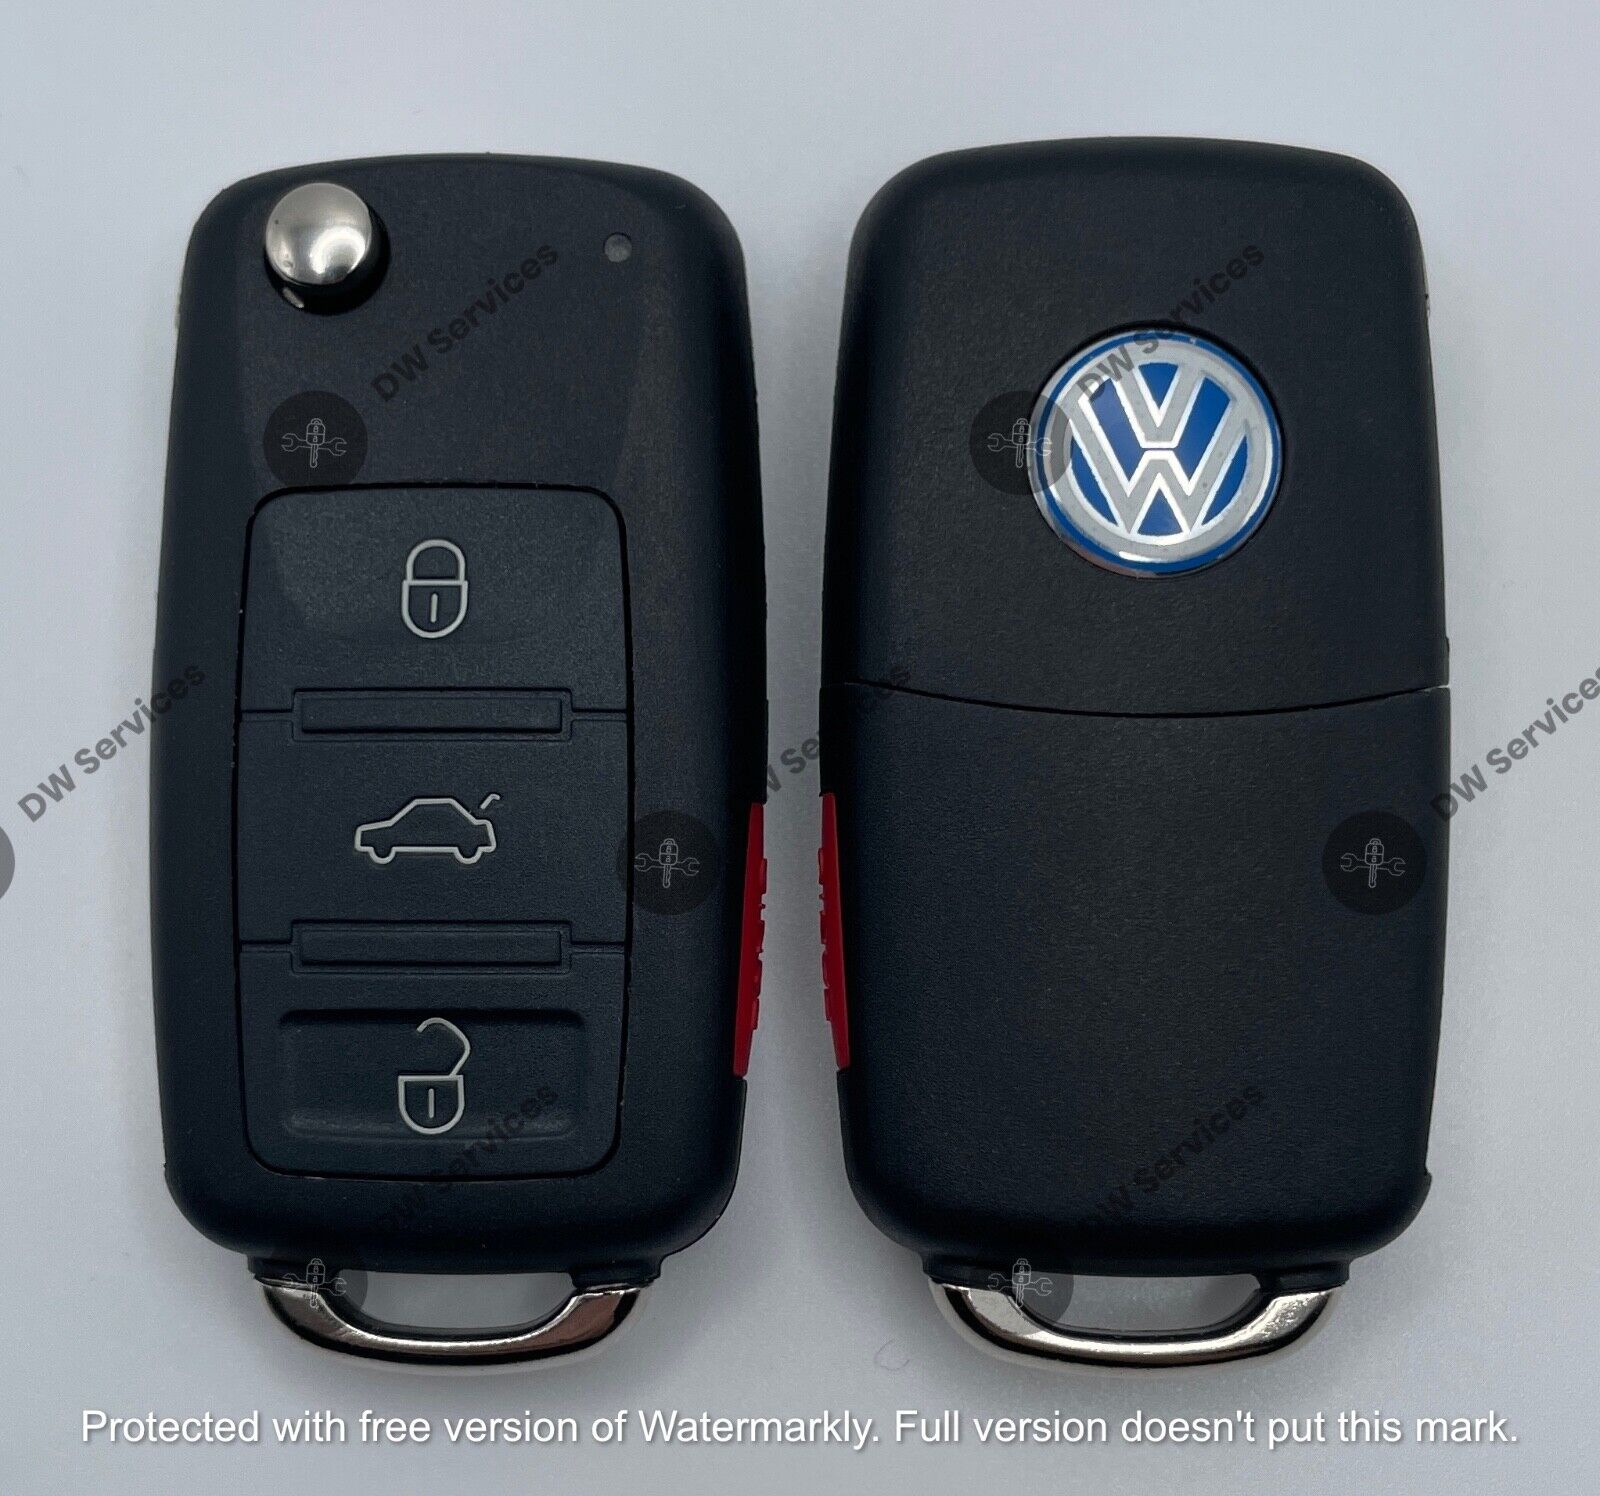 NEW Volkswagen TOUAREG 2004-2010 4-button flip key remote fob KR55WK45022 ID46